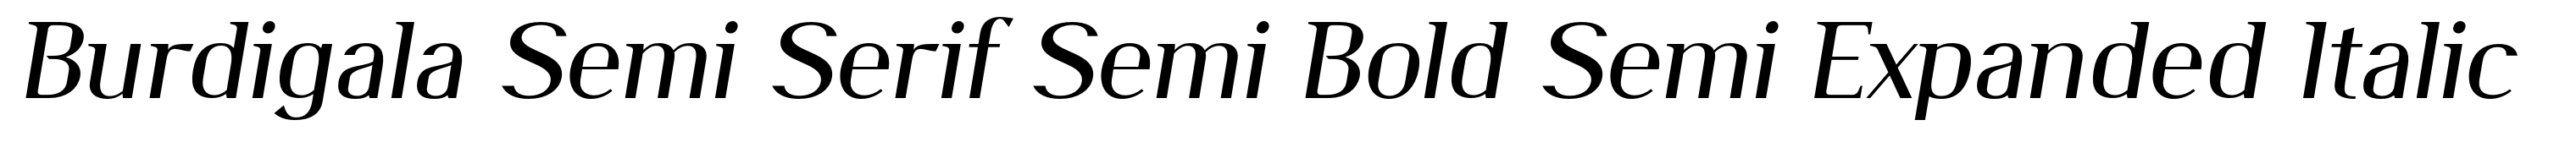 Burdigala Semi Serif Semi Bold Semi Expanded Italic